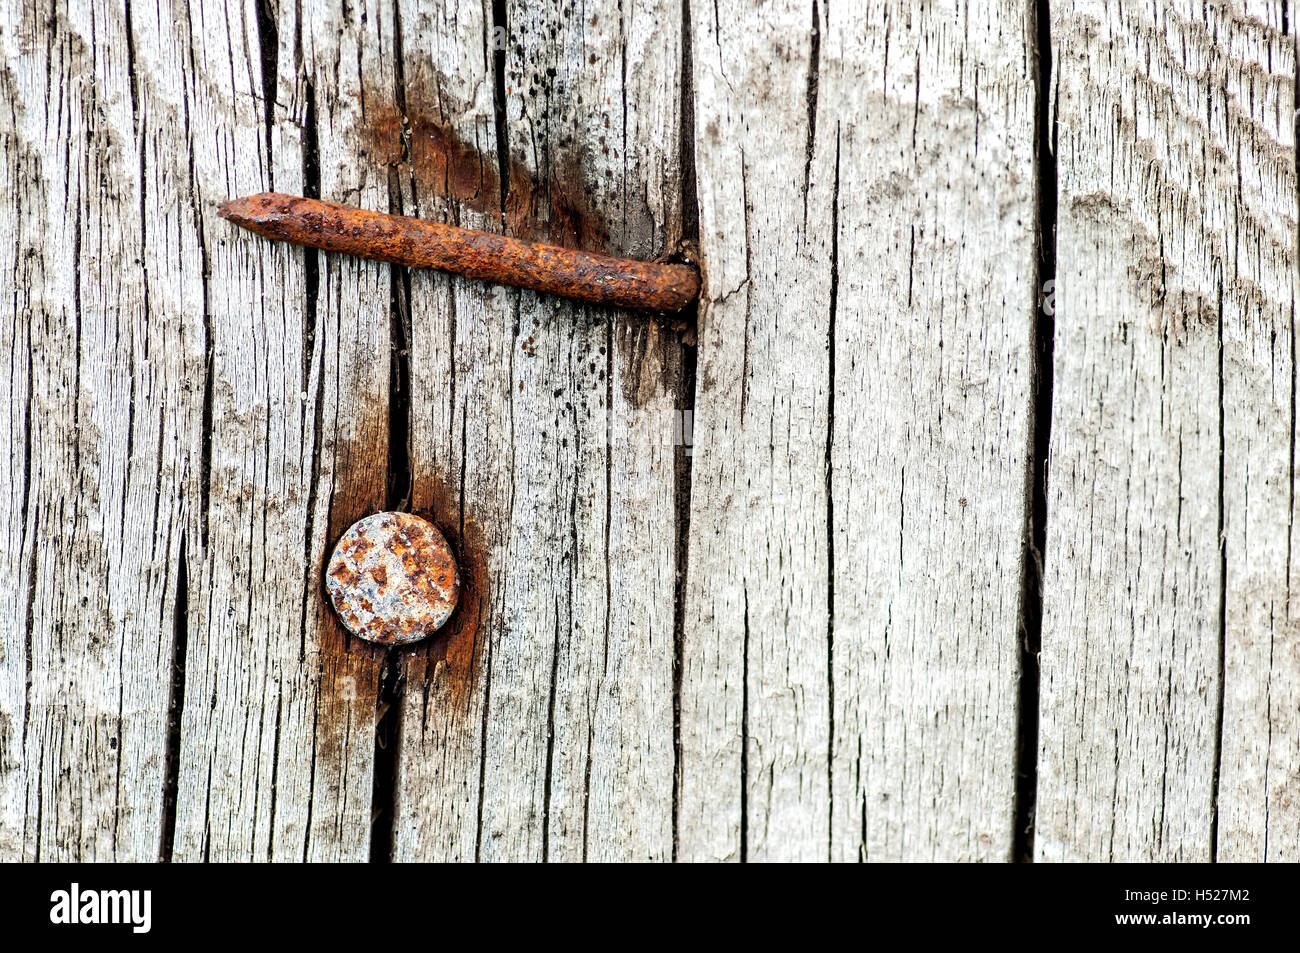 Antecedentes clavos oxidados en un antiguo madera agrietada Foto de stock